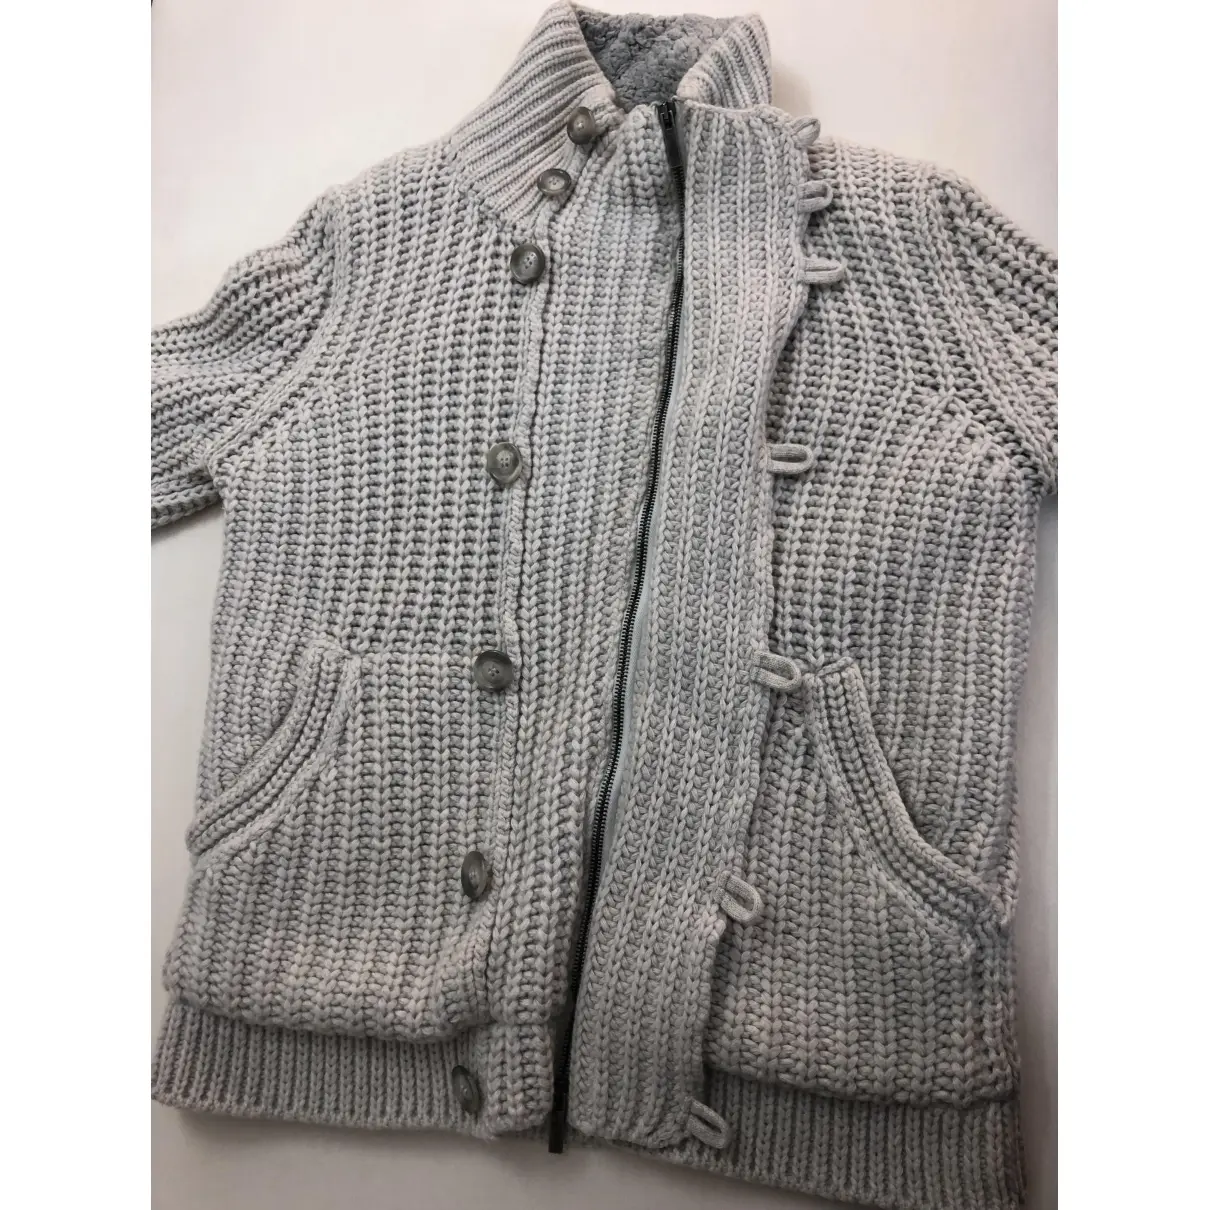 Wool vest Esemplare